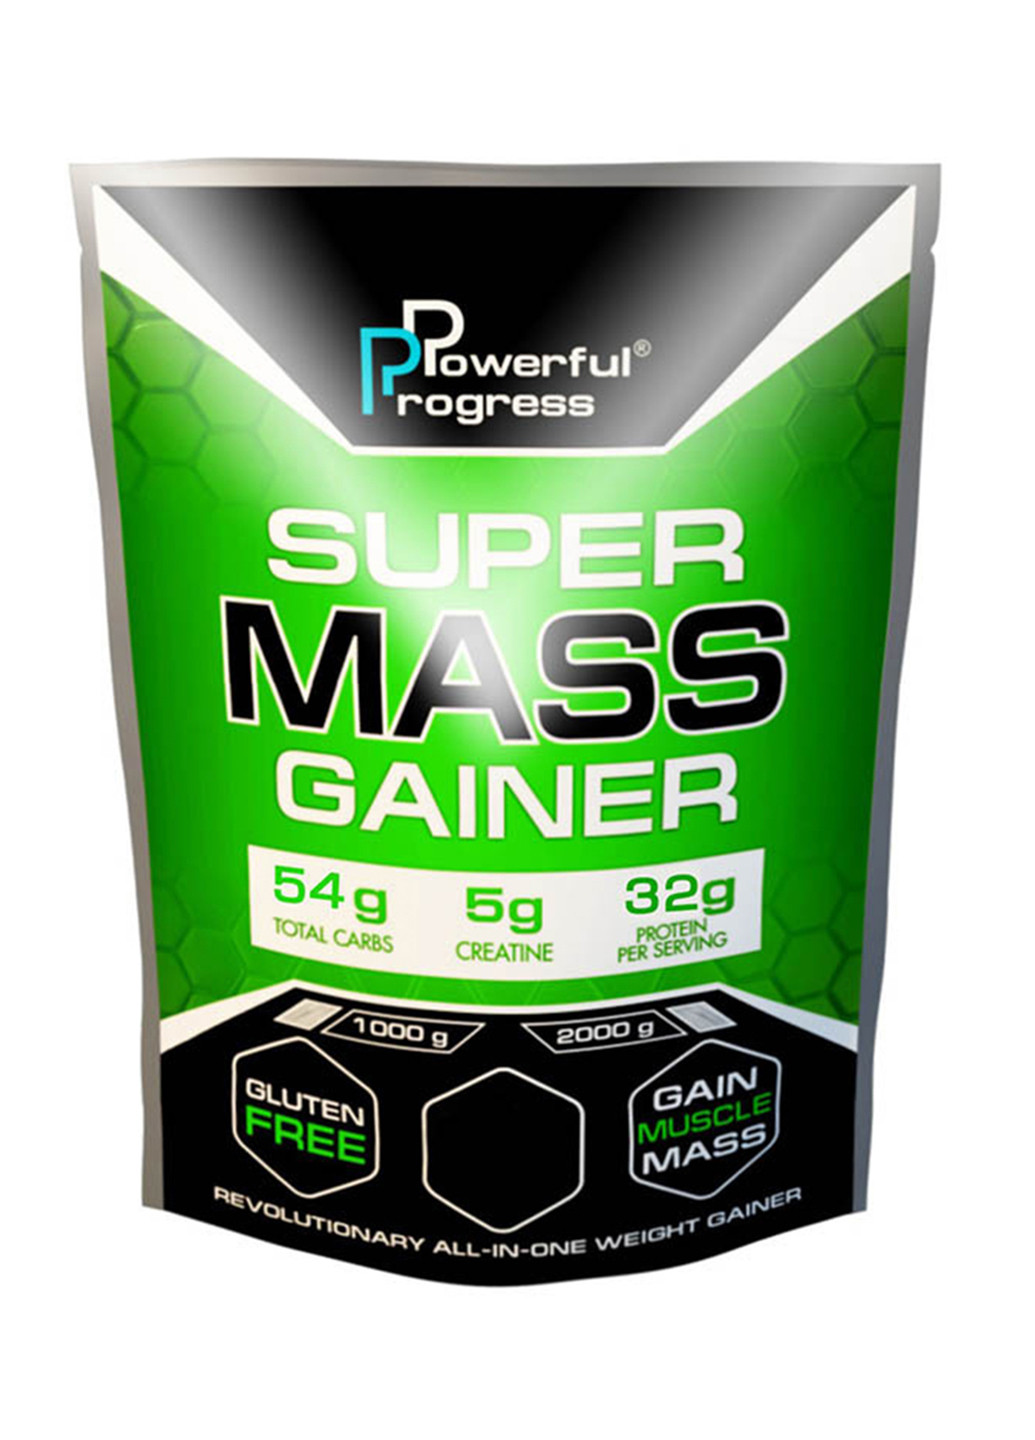 Углеводный гейнер Super Mass Gainer - 2000g Cappucino Powerful Progress гейнер (244701429)